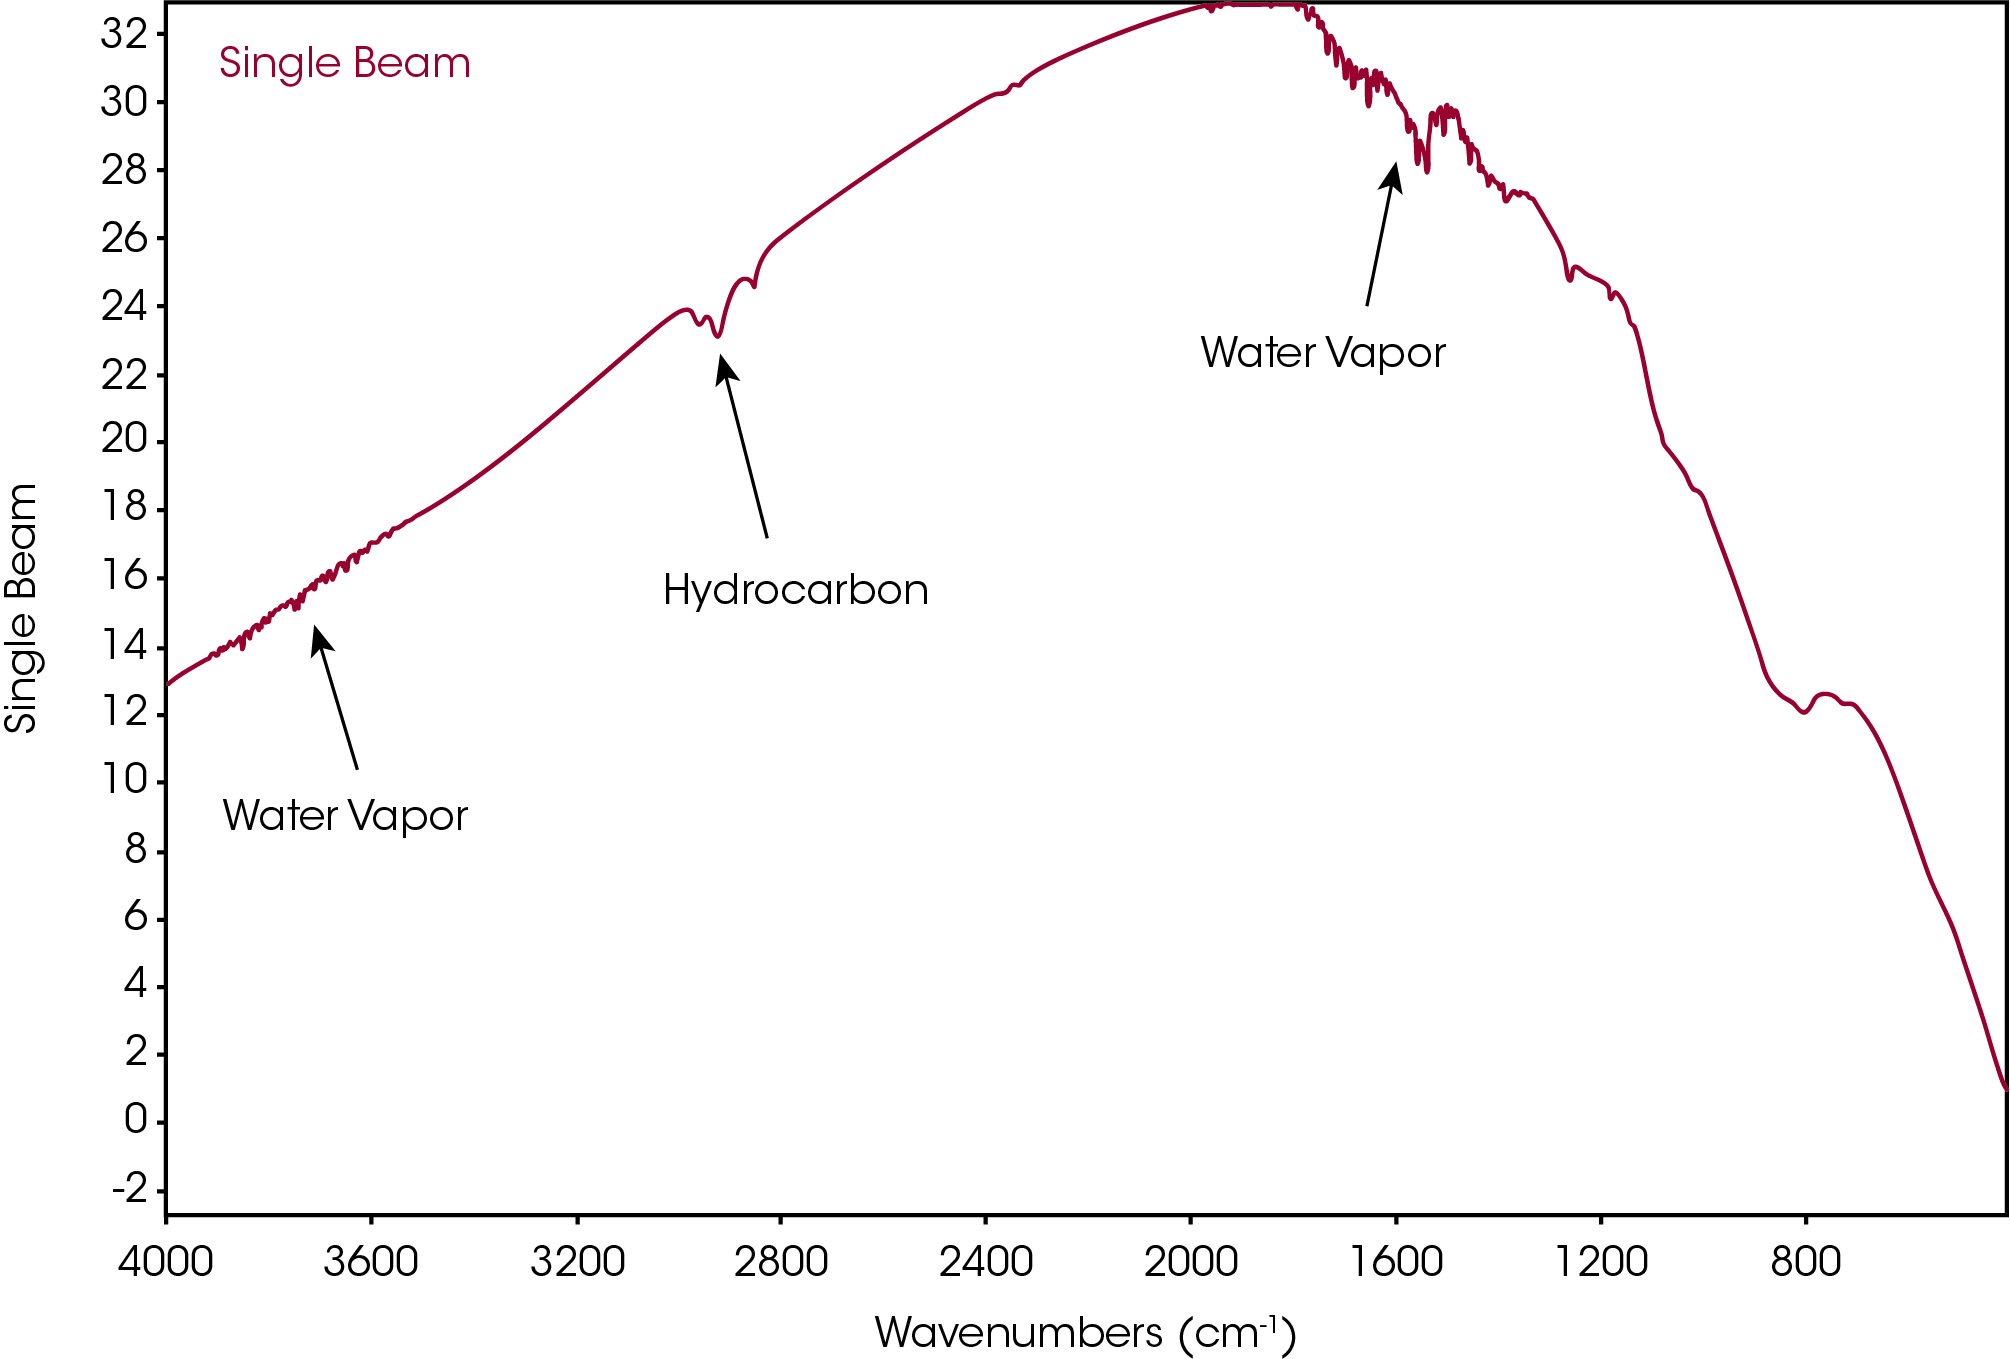 Figure 1. Normal single beam spectrum